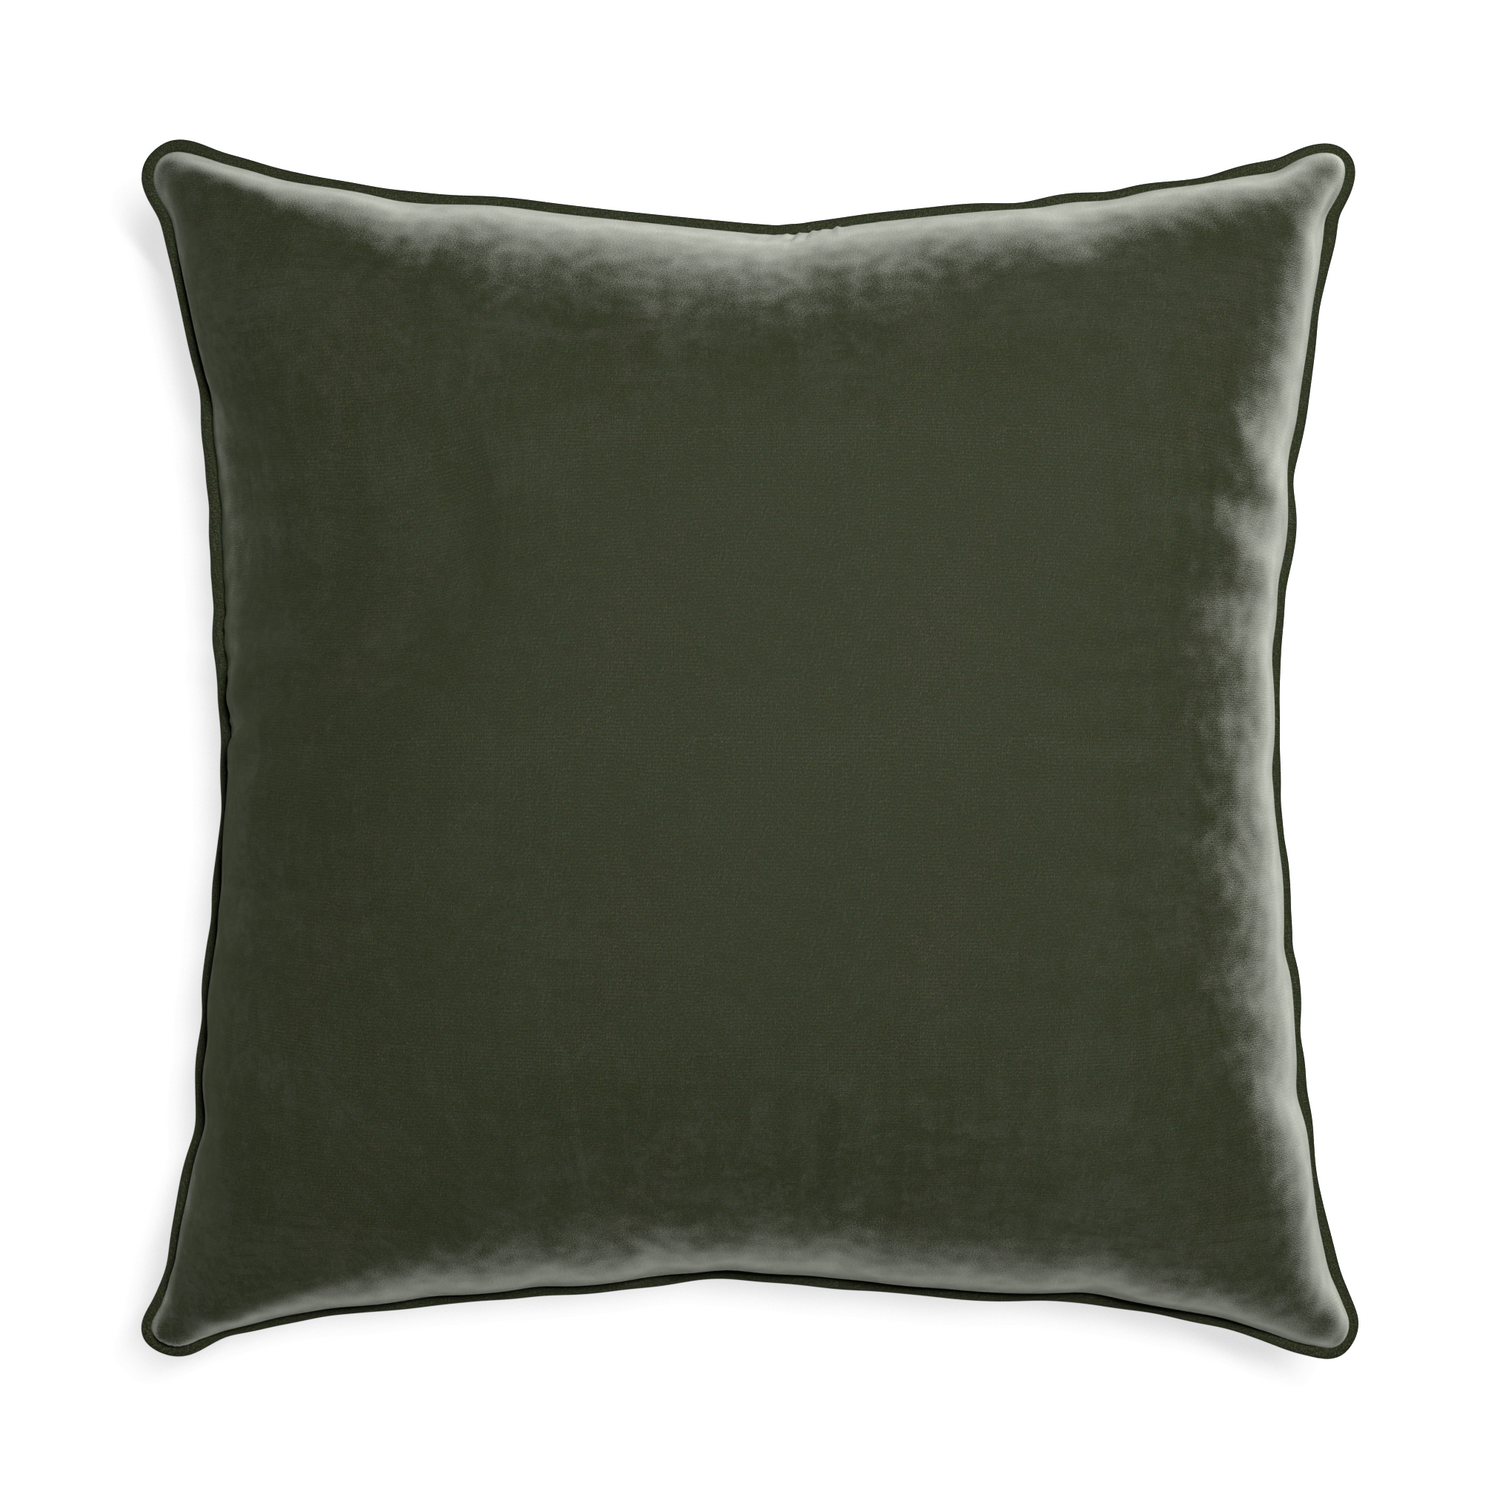 square fern green velvet pillow with fern green piping